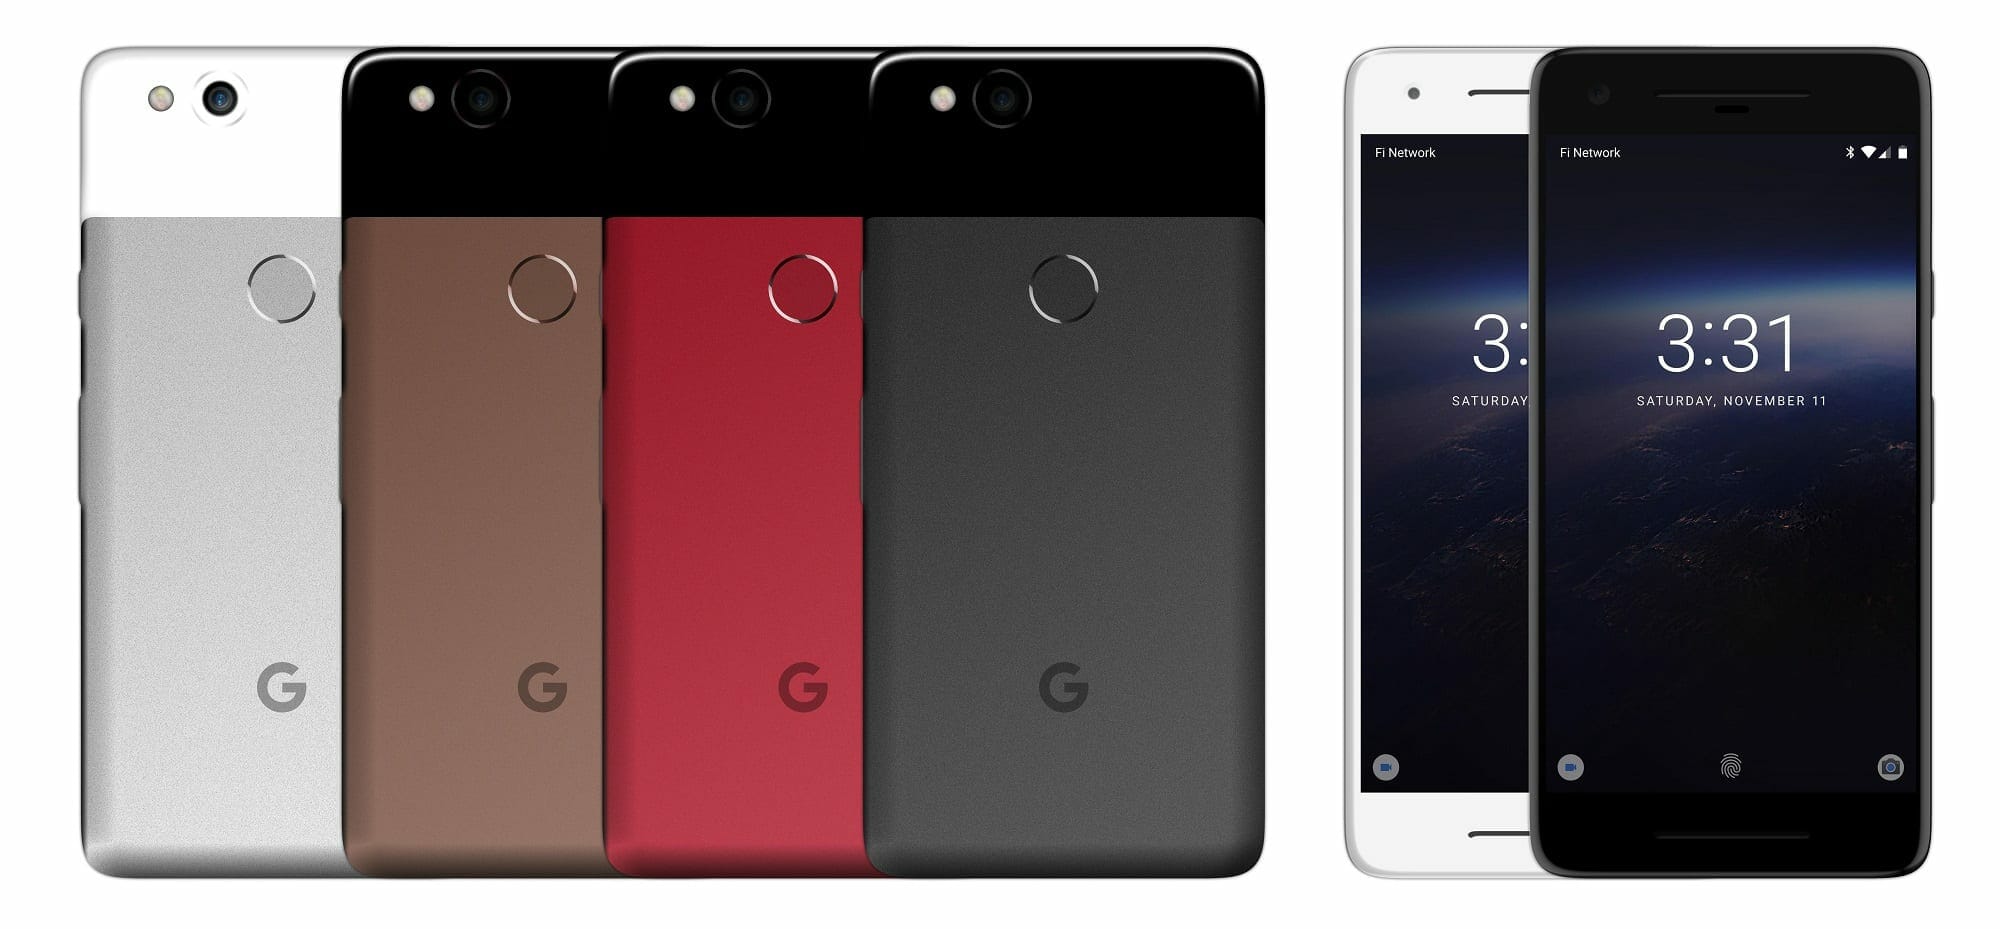 Google Pixel 2 and Pixel XL